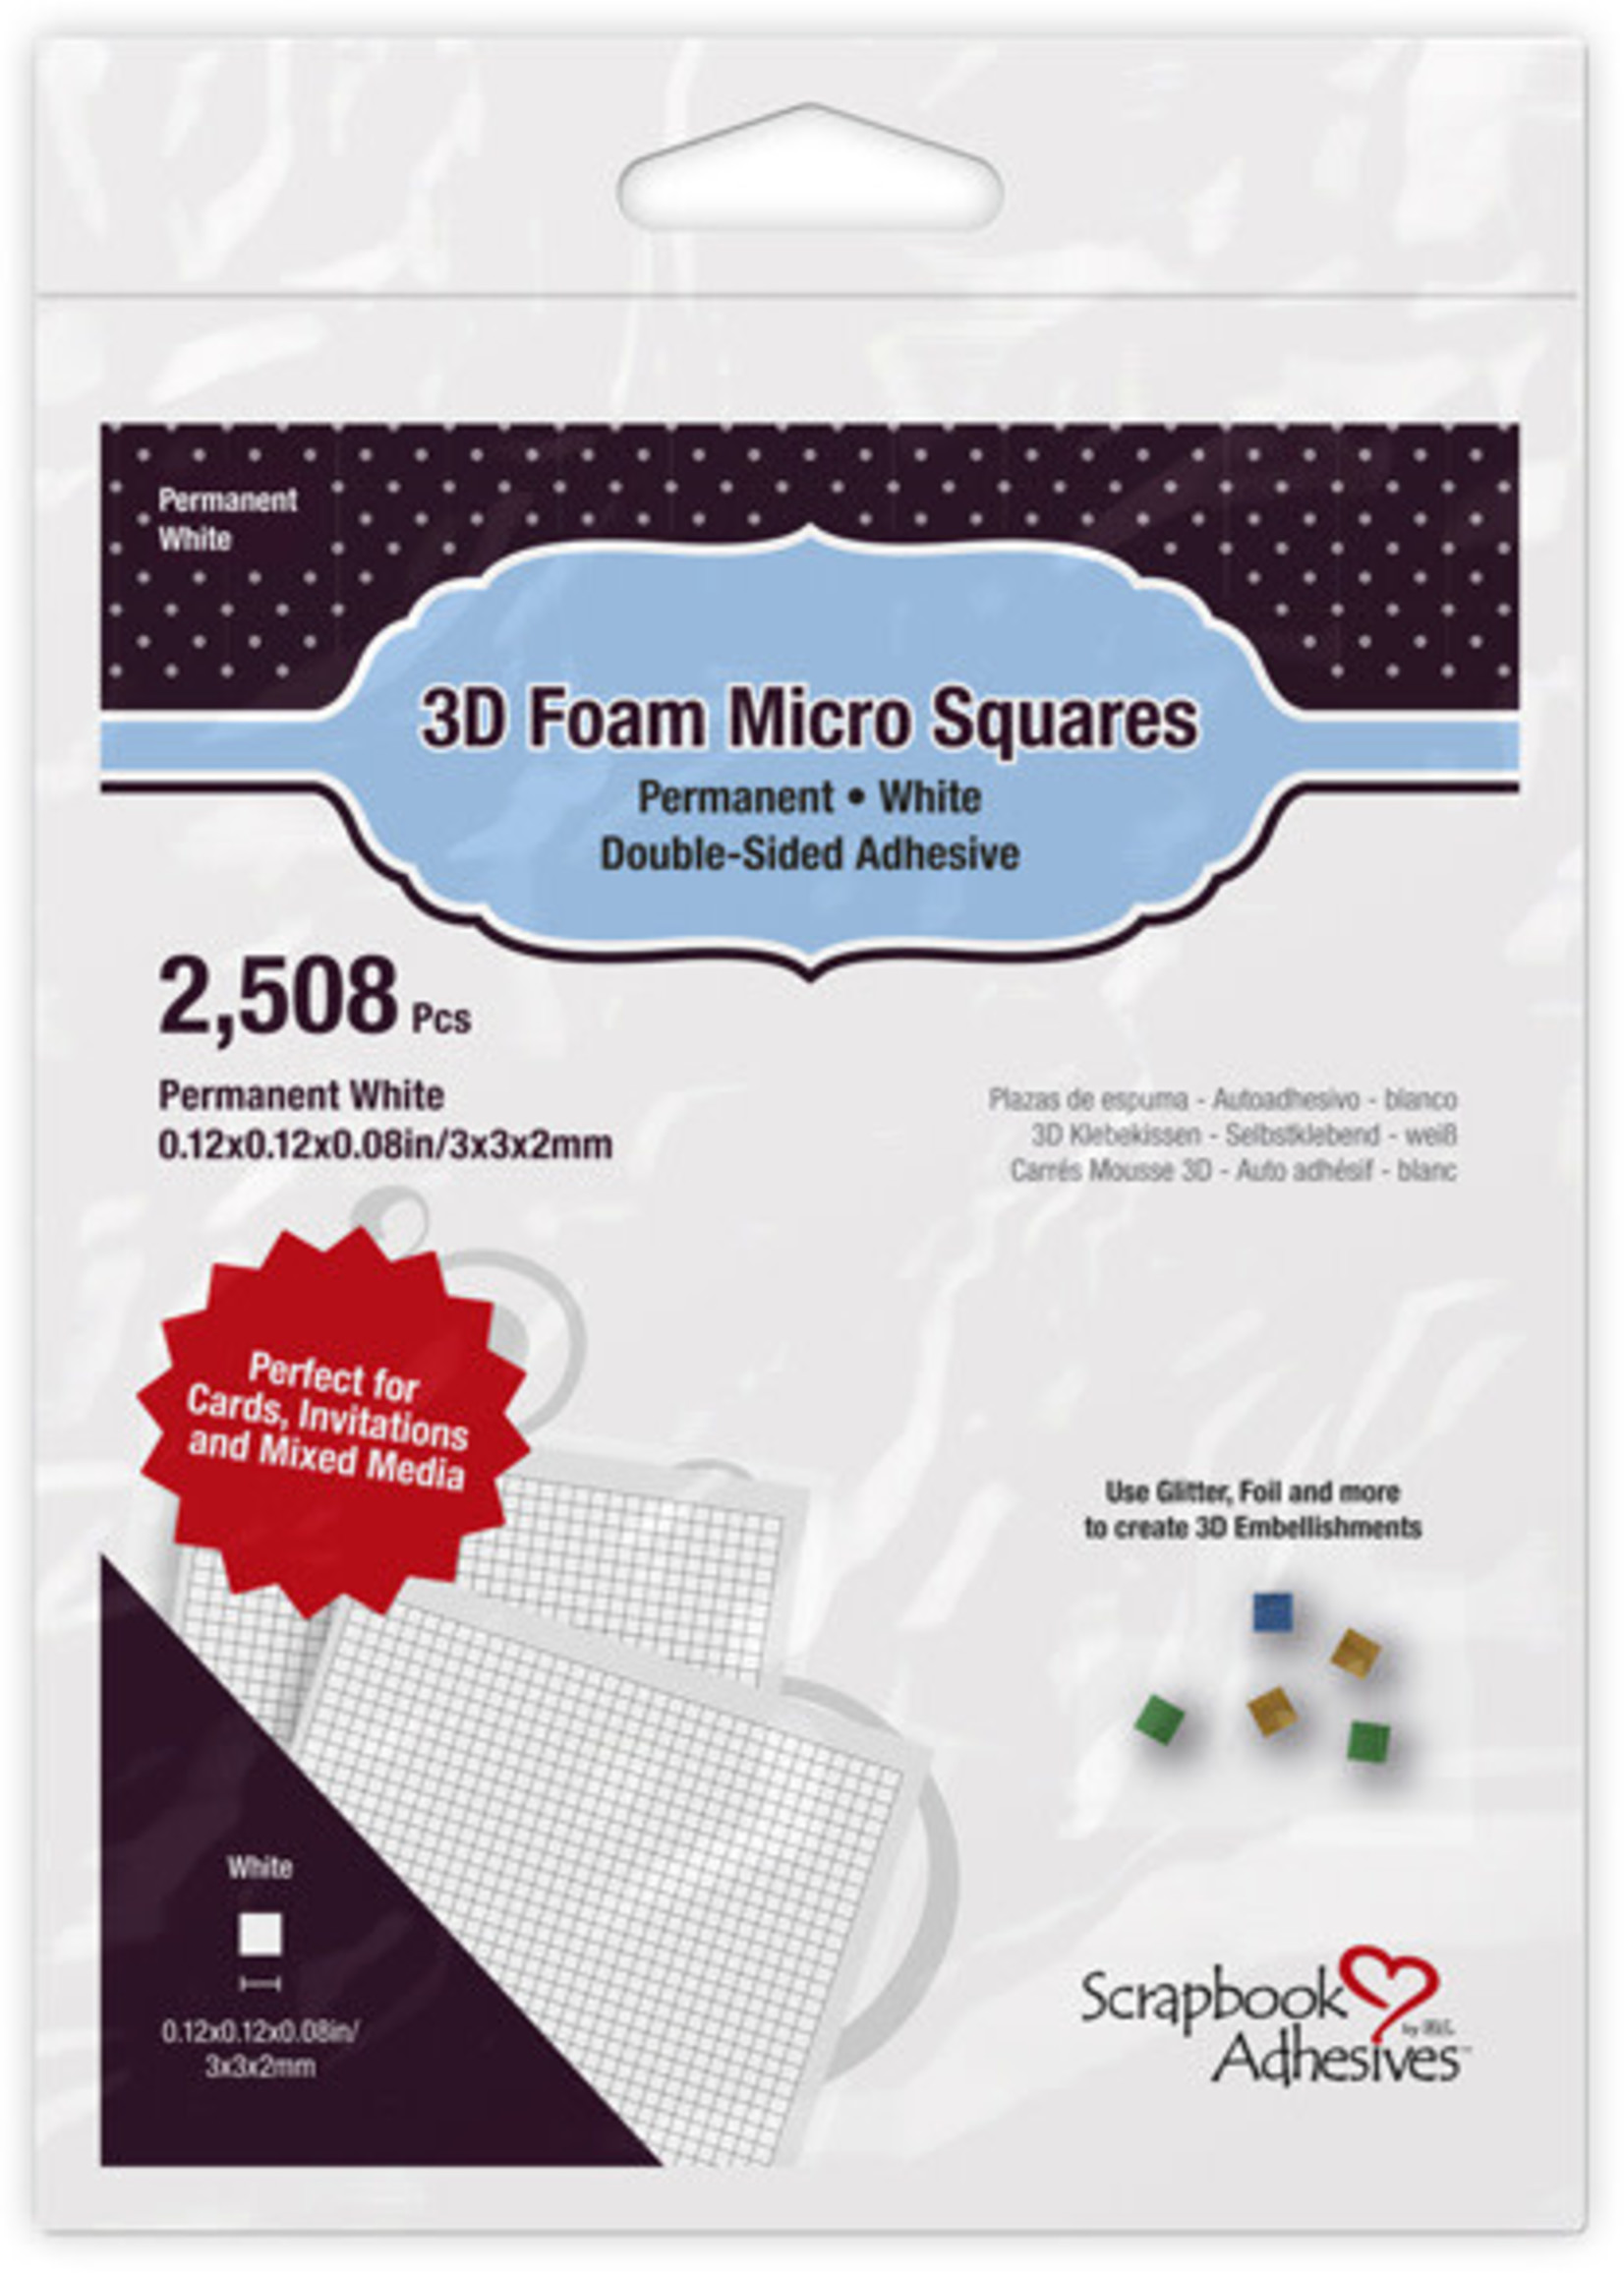 Scrapbook Adhesive SA 3D Foam Micro Squares, White